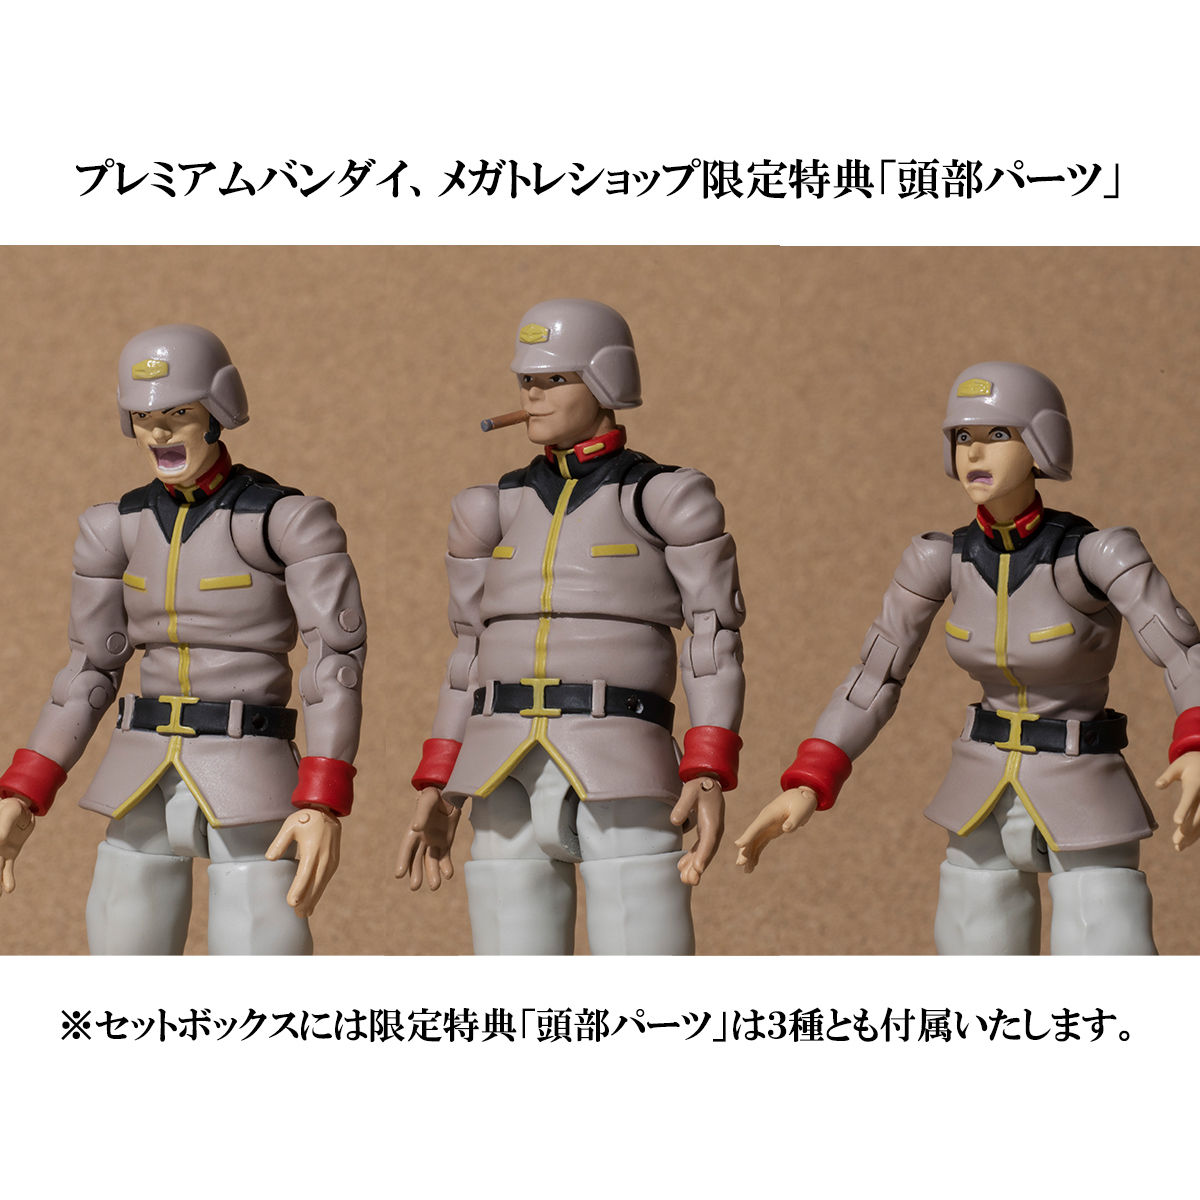 Megahobby Gundam Military Generation 1/18 Earth Federation Soldier set(Mobile Suit Gundam)